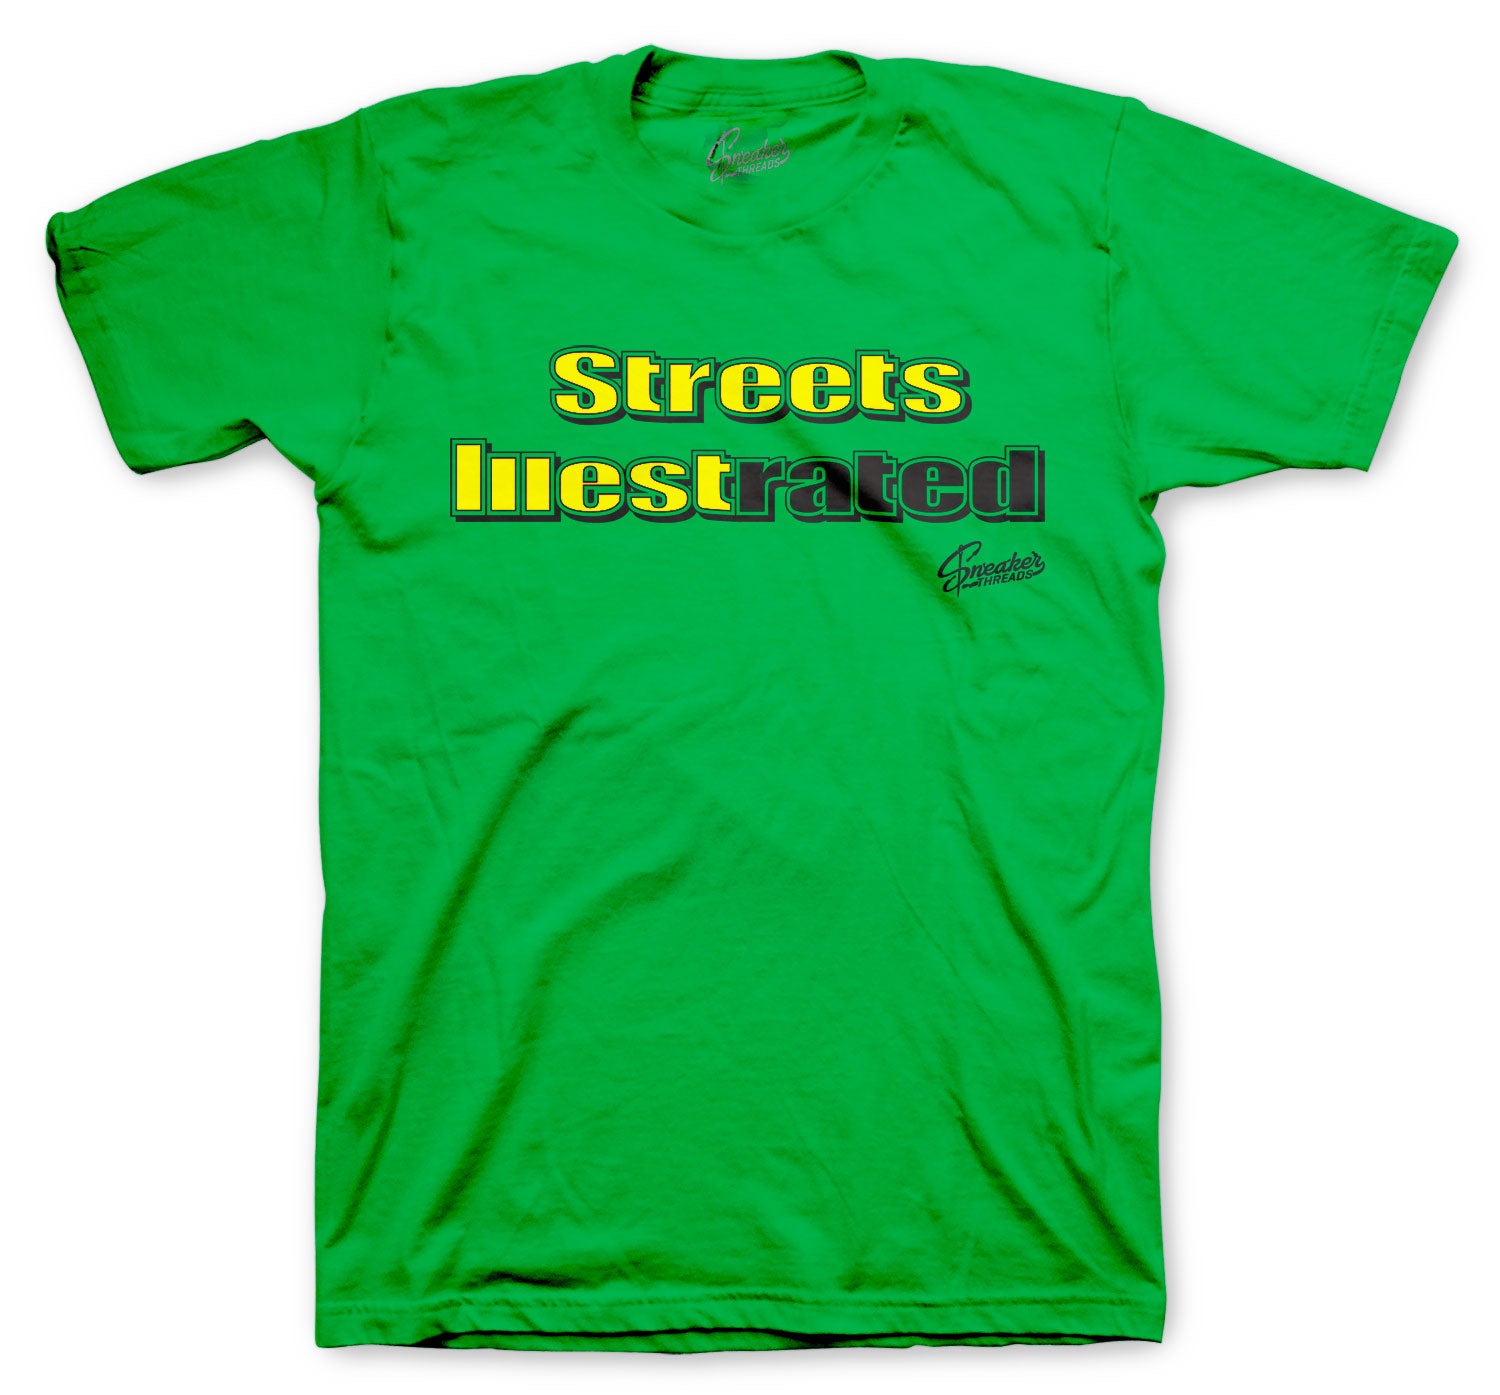 Retro 5 Oregon Shirt - Illest Rated - Green